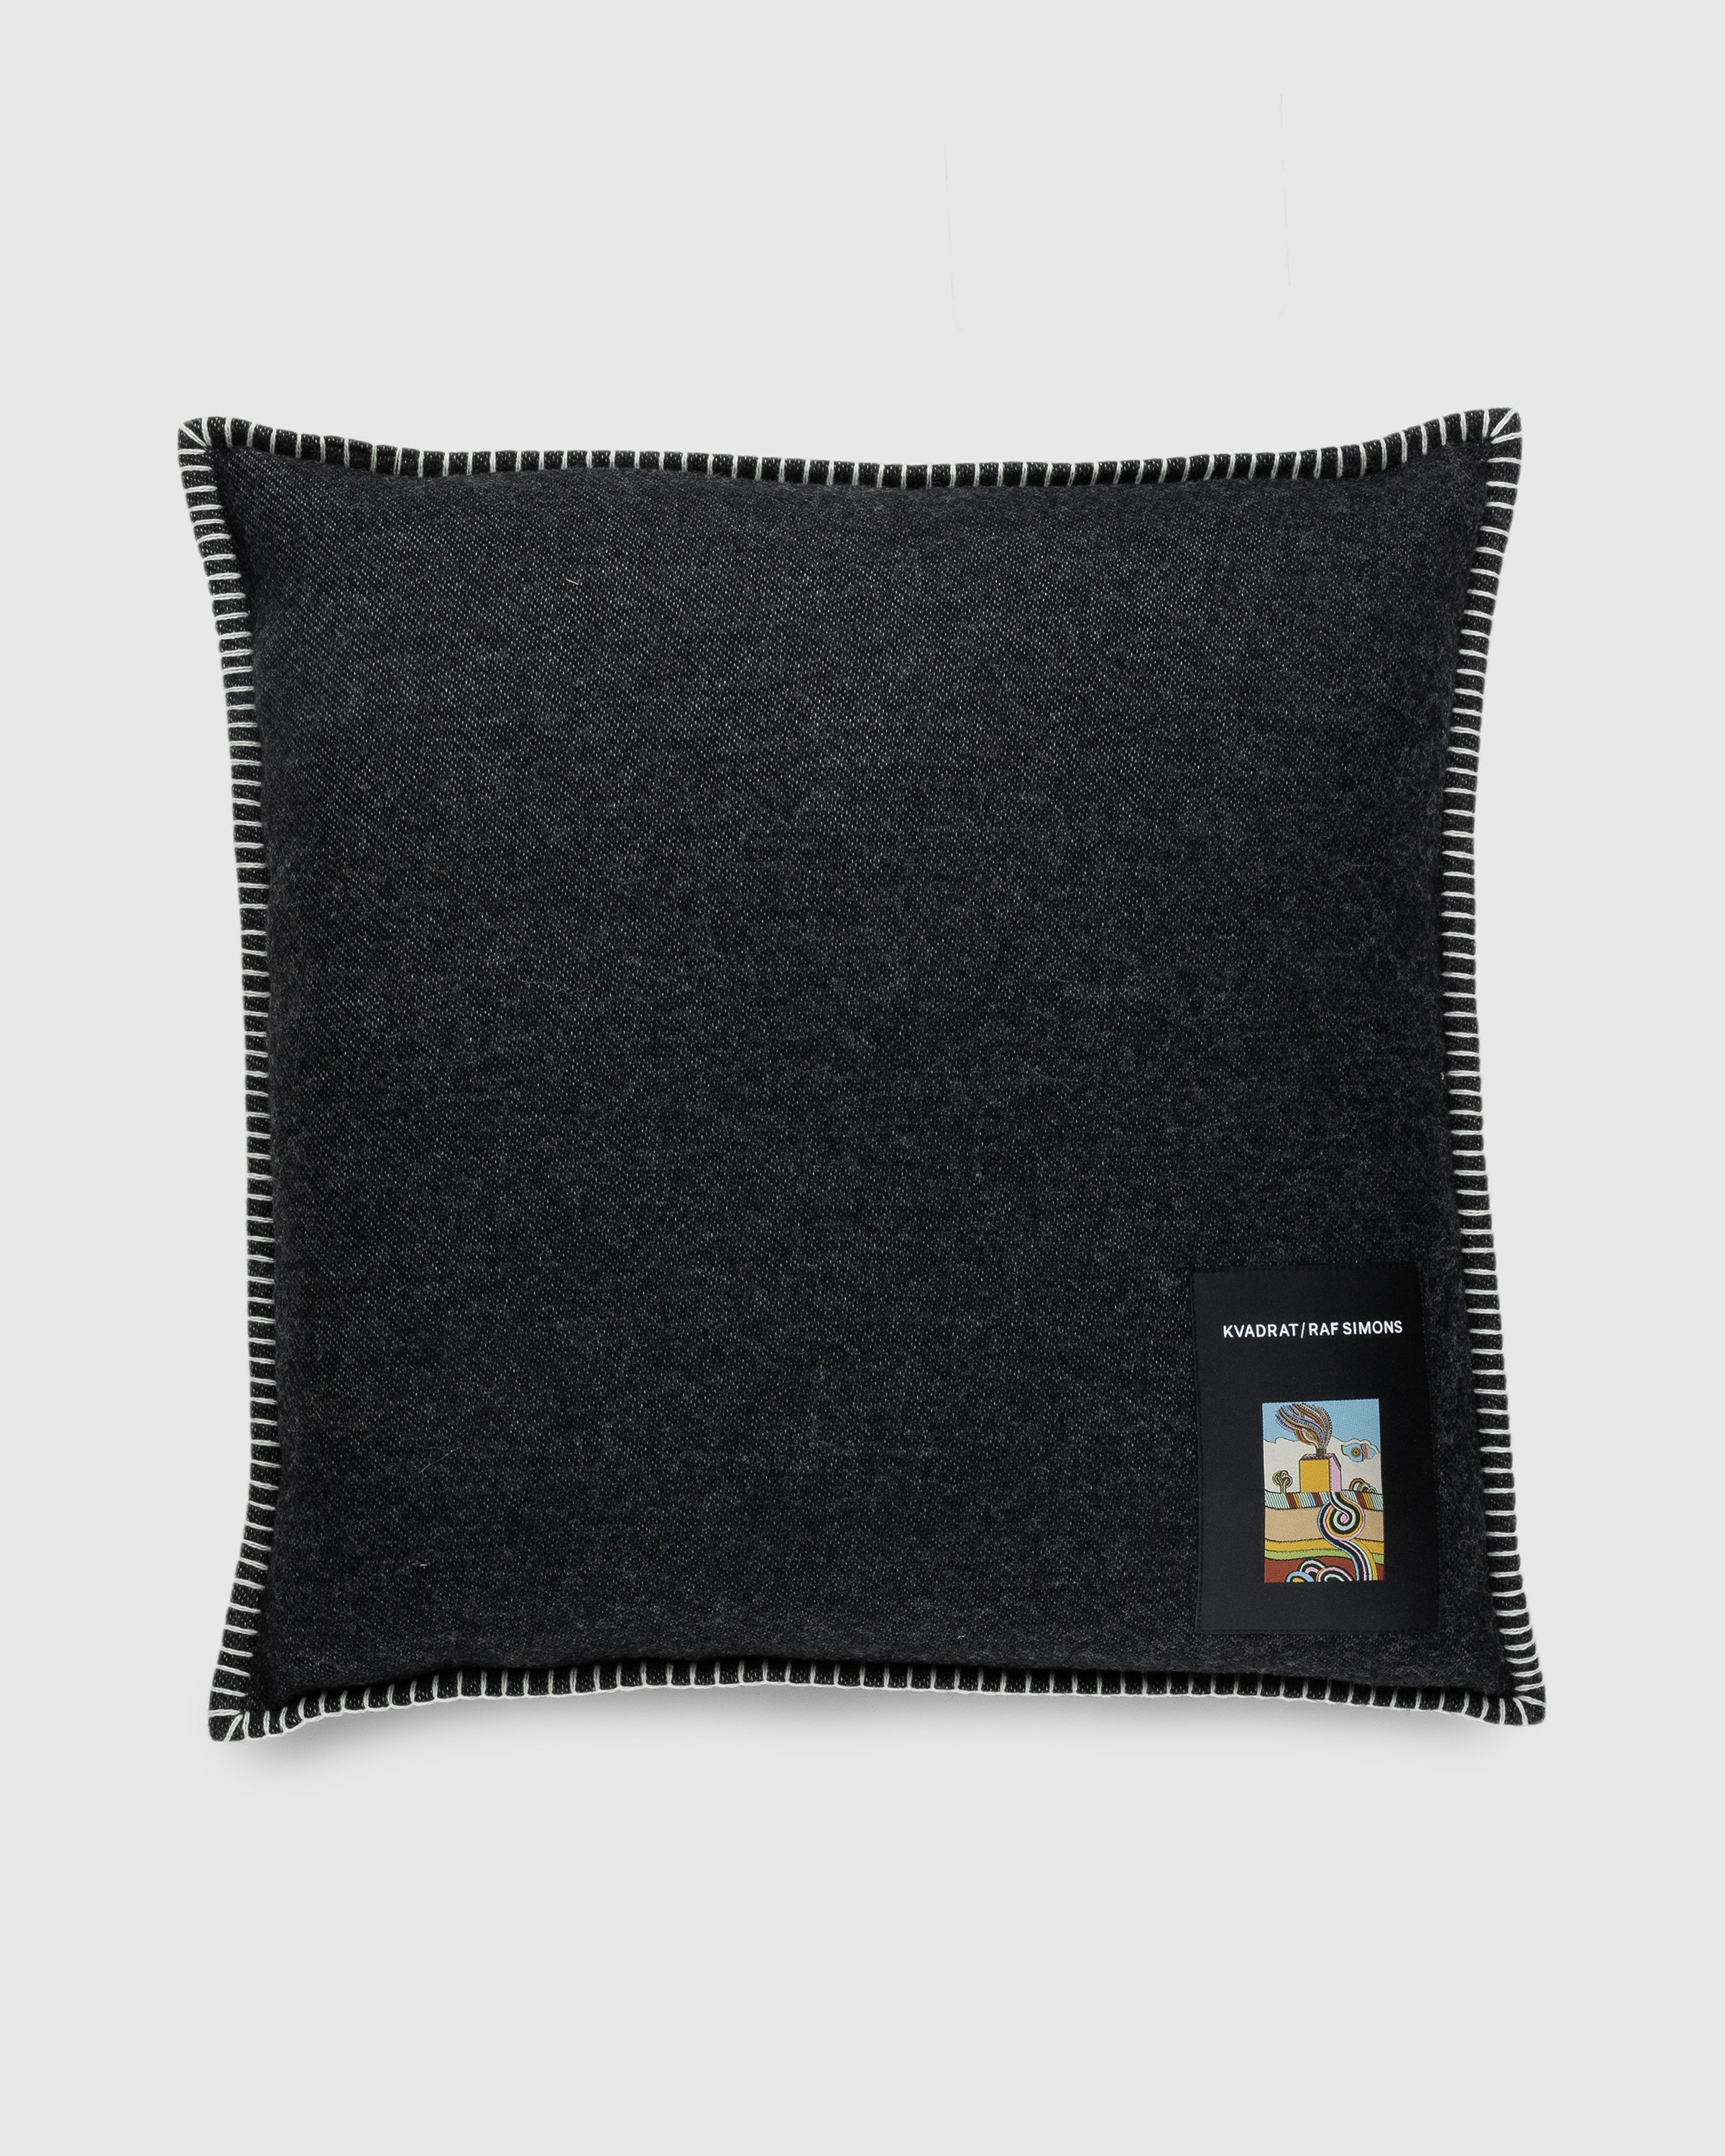 Kvadrat/Raf Simons - Lambswool Cushion Black - Lifestyle - Black - Image 1